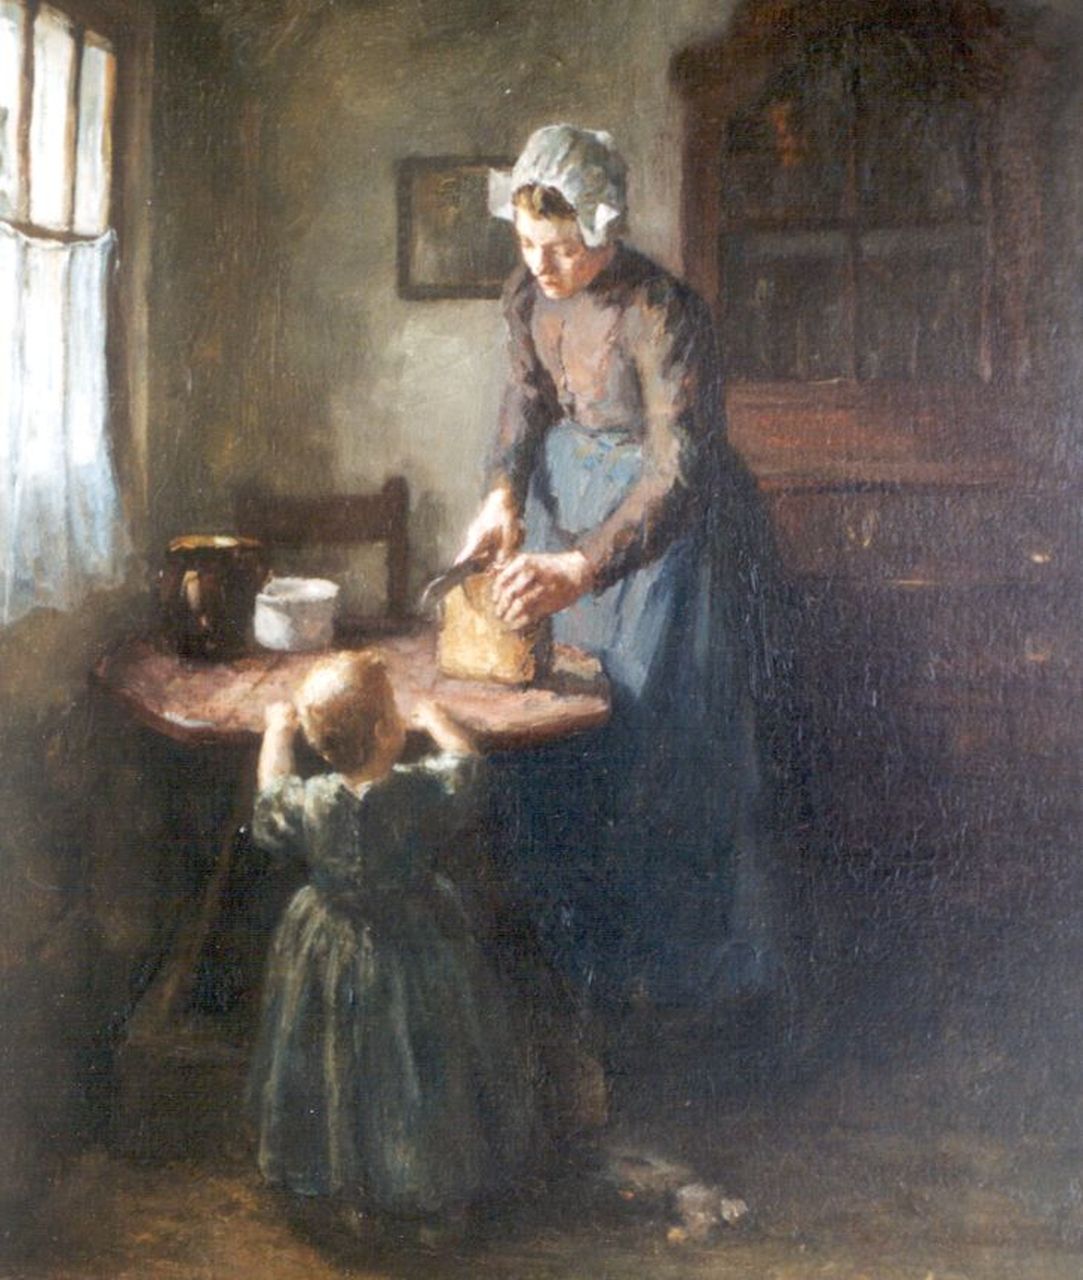 Tonge L.L. van der | 'Lammert' Leire van der Tonge, Interieur met moeder en kind, olieverf op doek 55,0 x 45,0 cm, gesigneerd linksonder